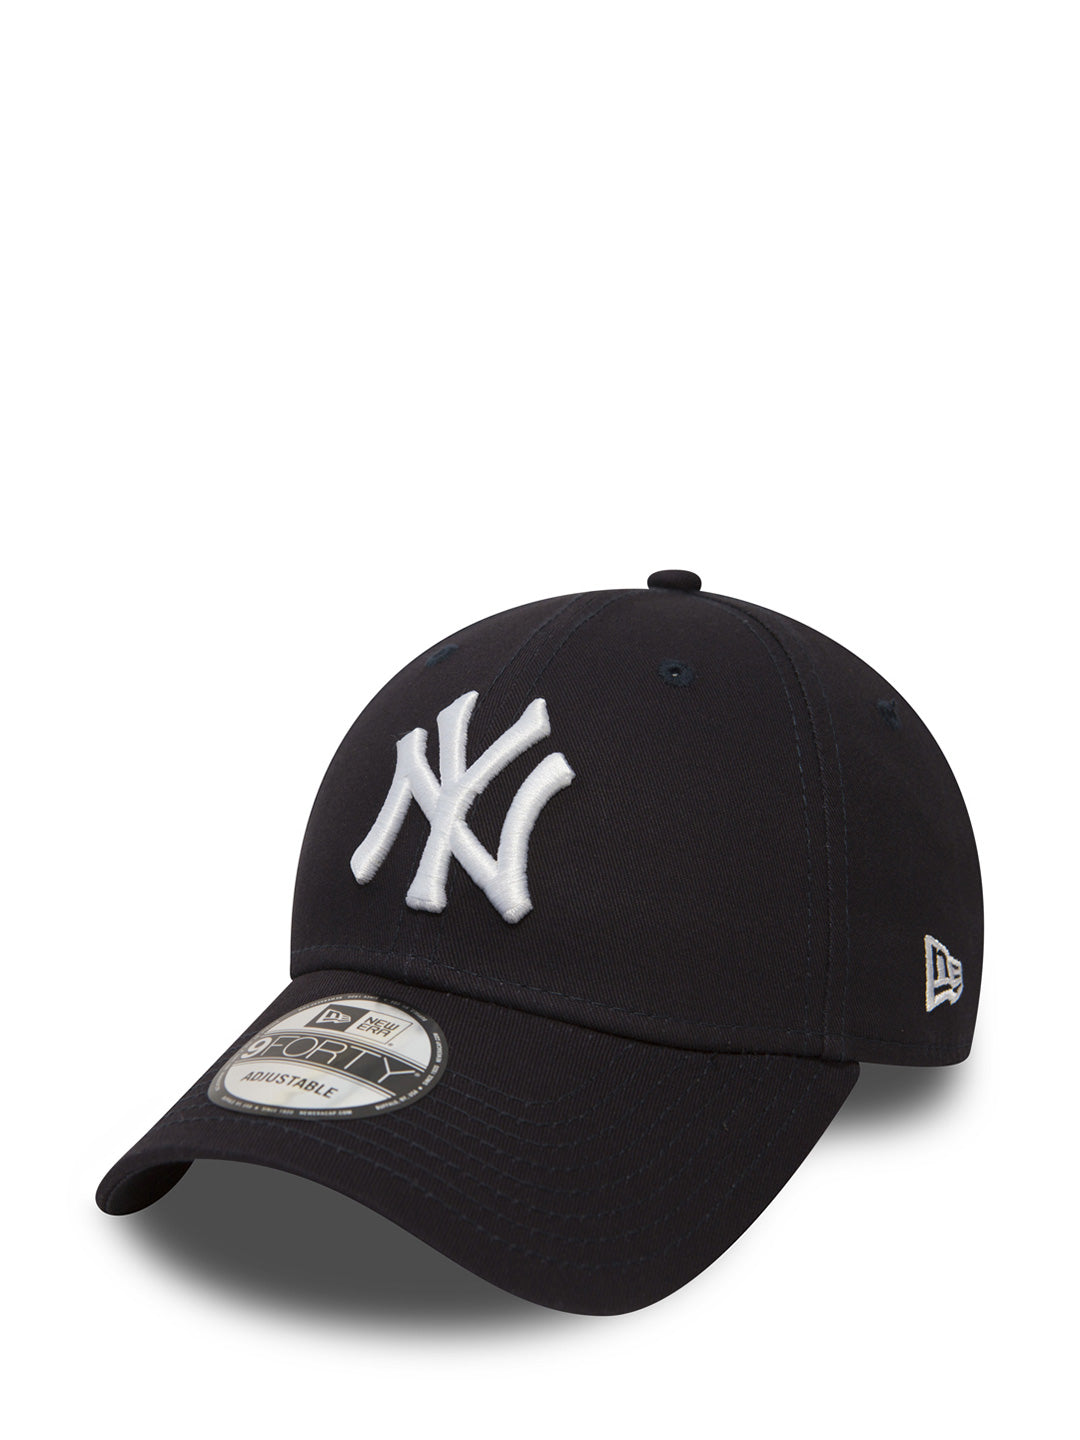 New Era Black and white cap